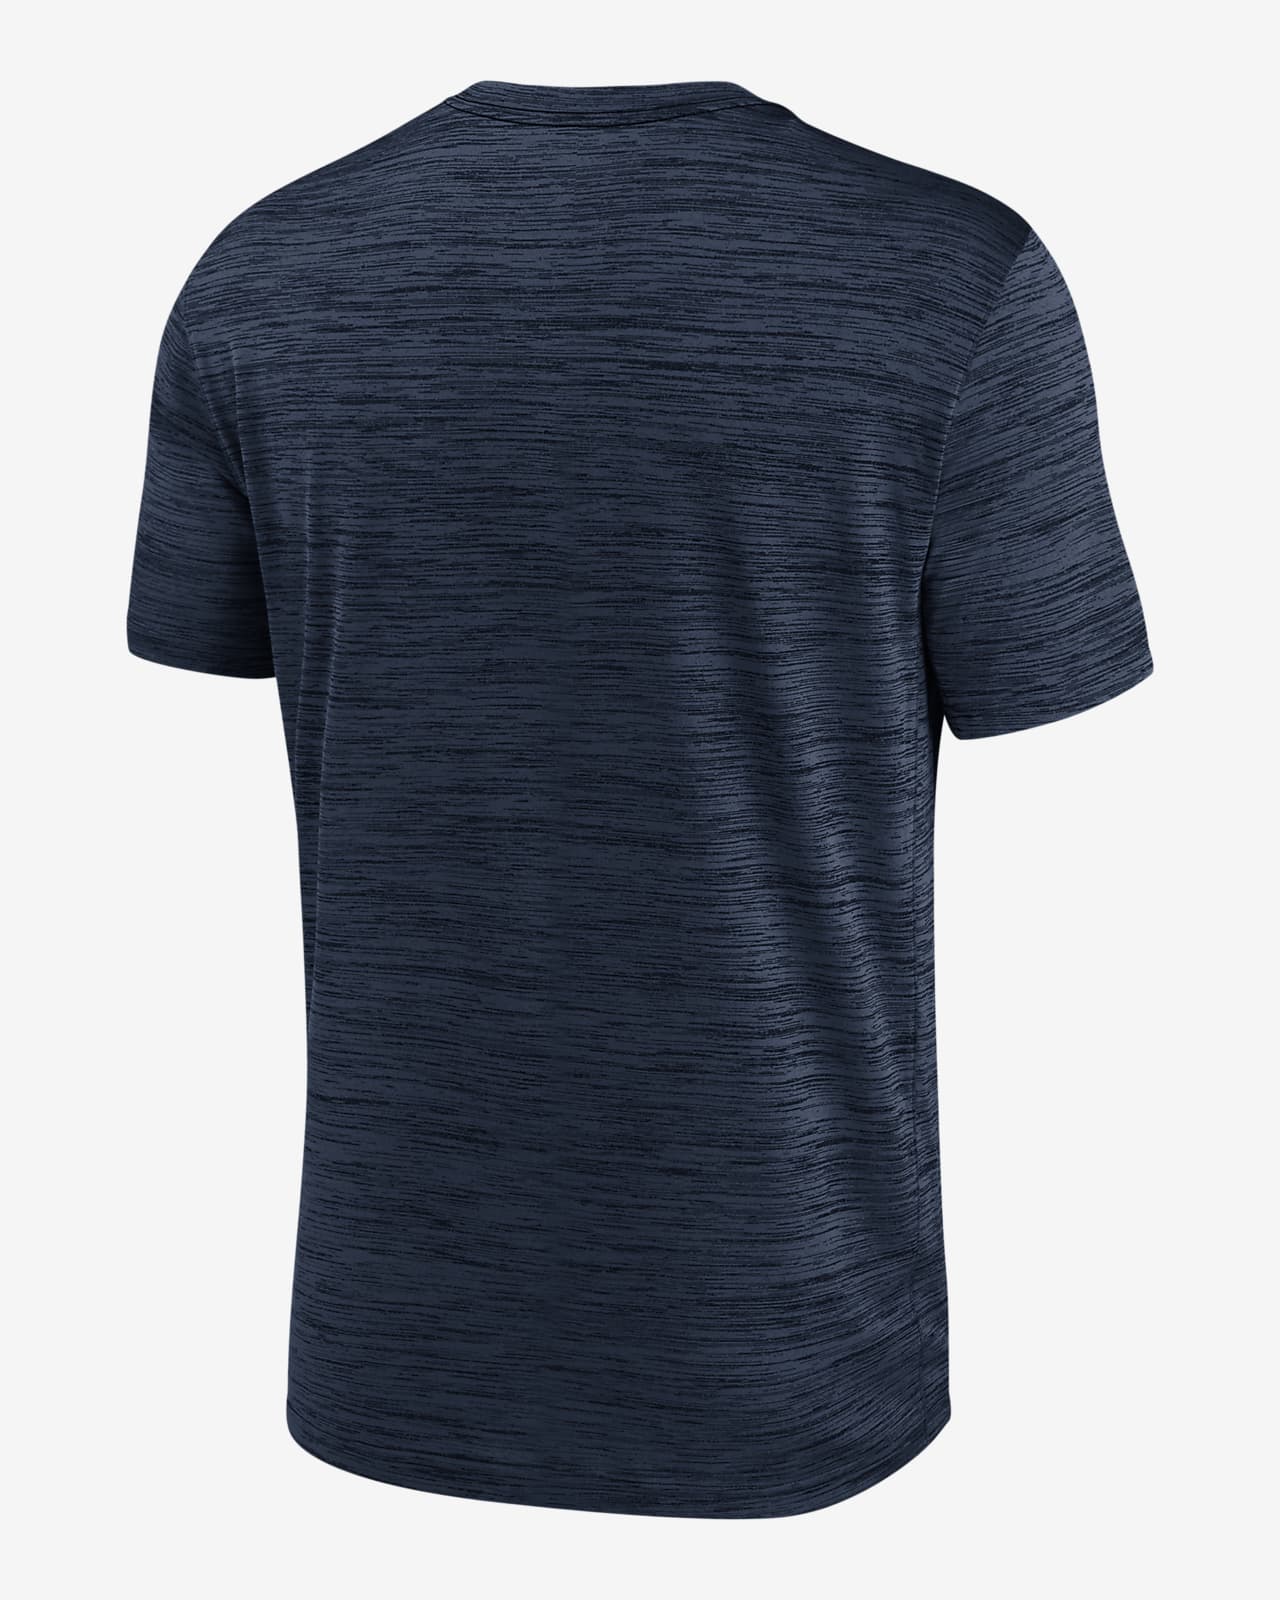 Men's Tampa Bay Rays Nike Light Blue Practice Performance T-Shirt